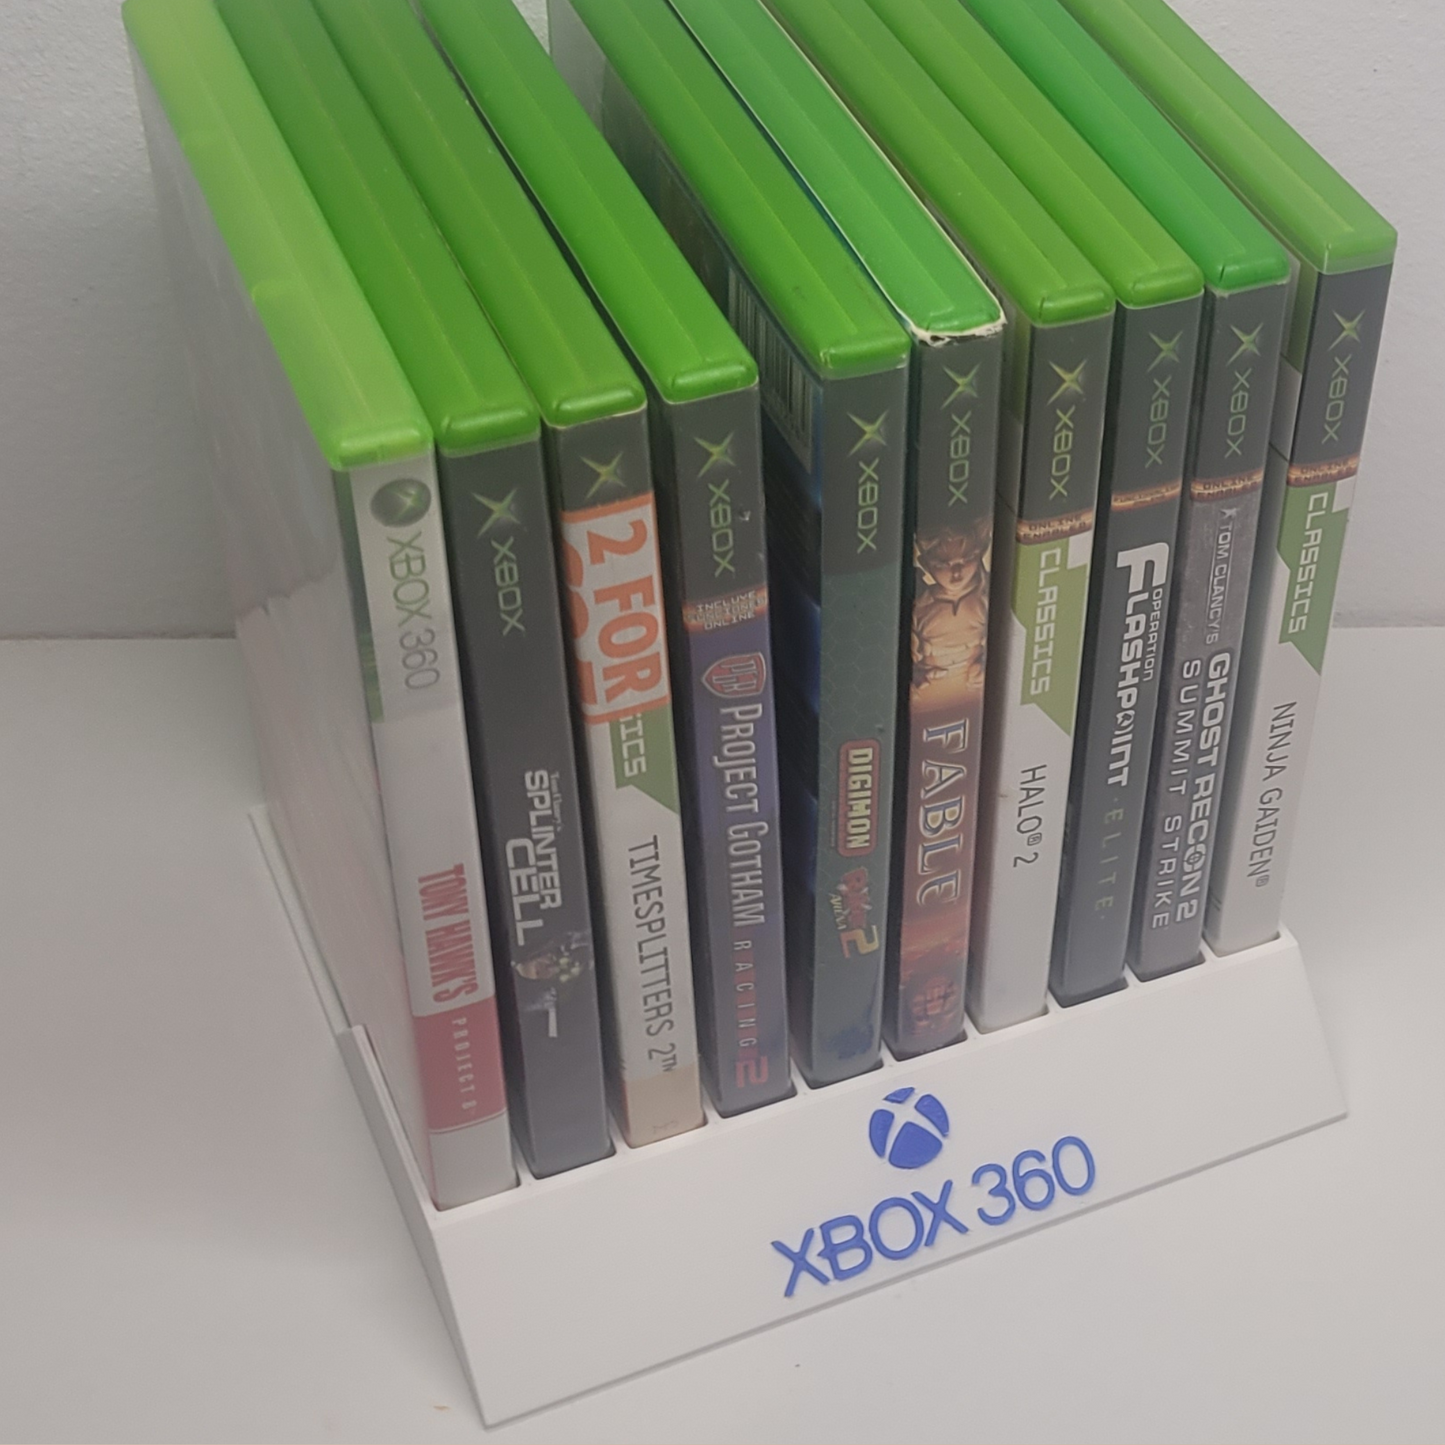 Expositor Juegos Microsoft Xbox 360